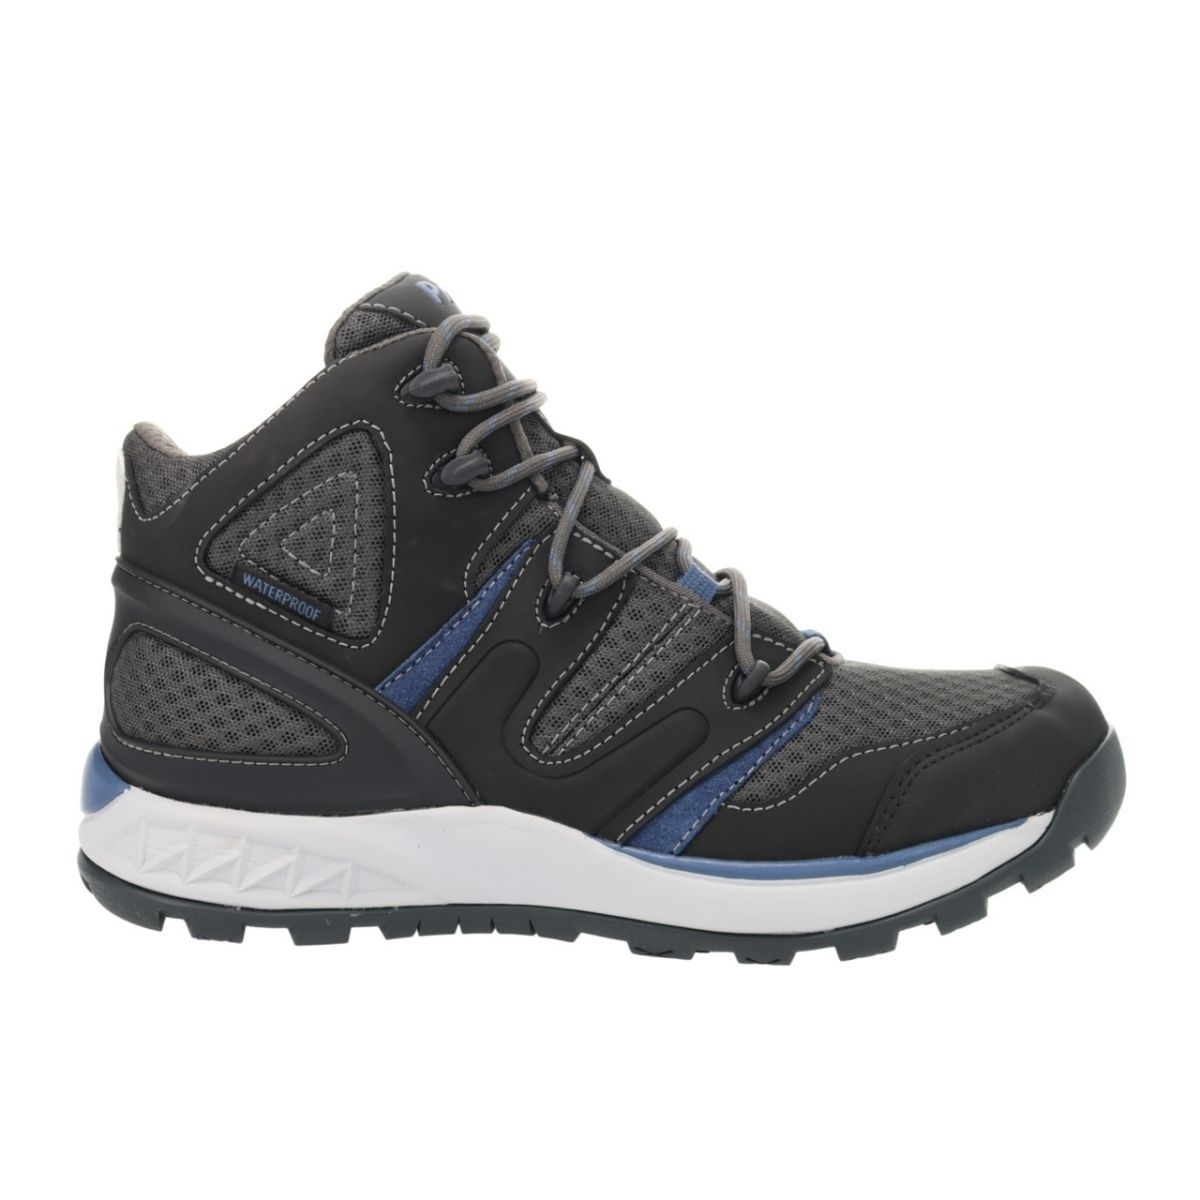 Propet Men's Veymont Waterproof Hiking Boot Grey/Blue - MOA022SGRB GREY/BLUE - GREY/BLUE, 8.5